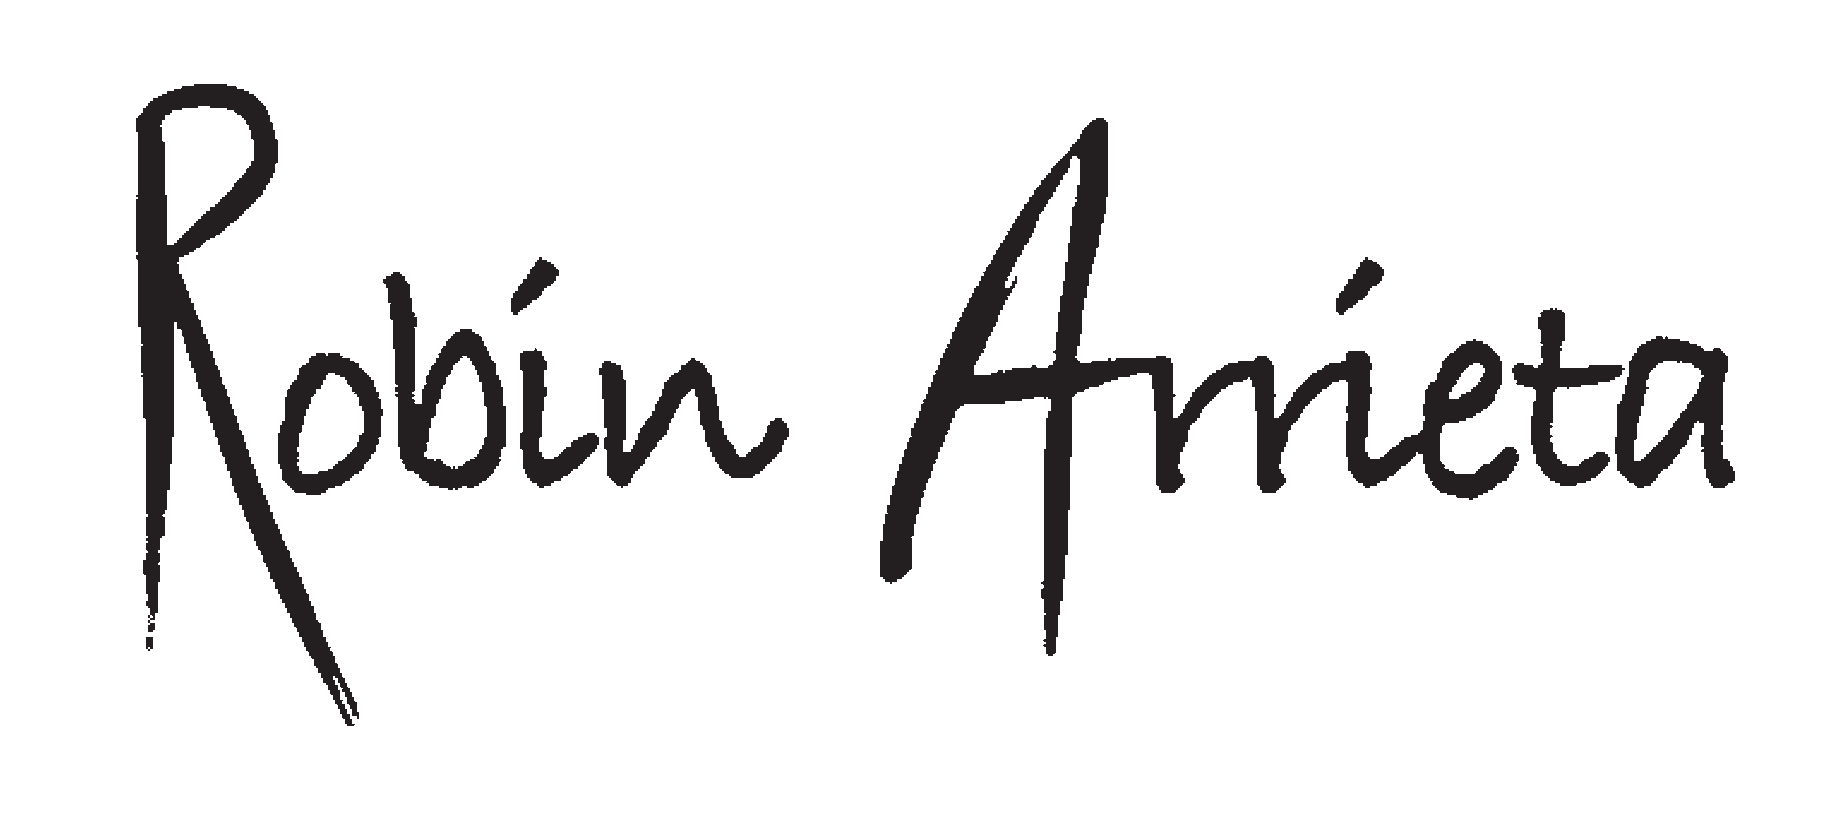 Robin Arrieta logo